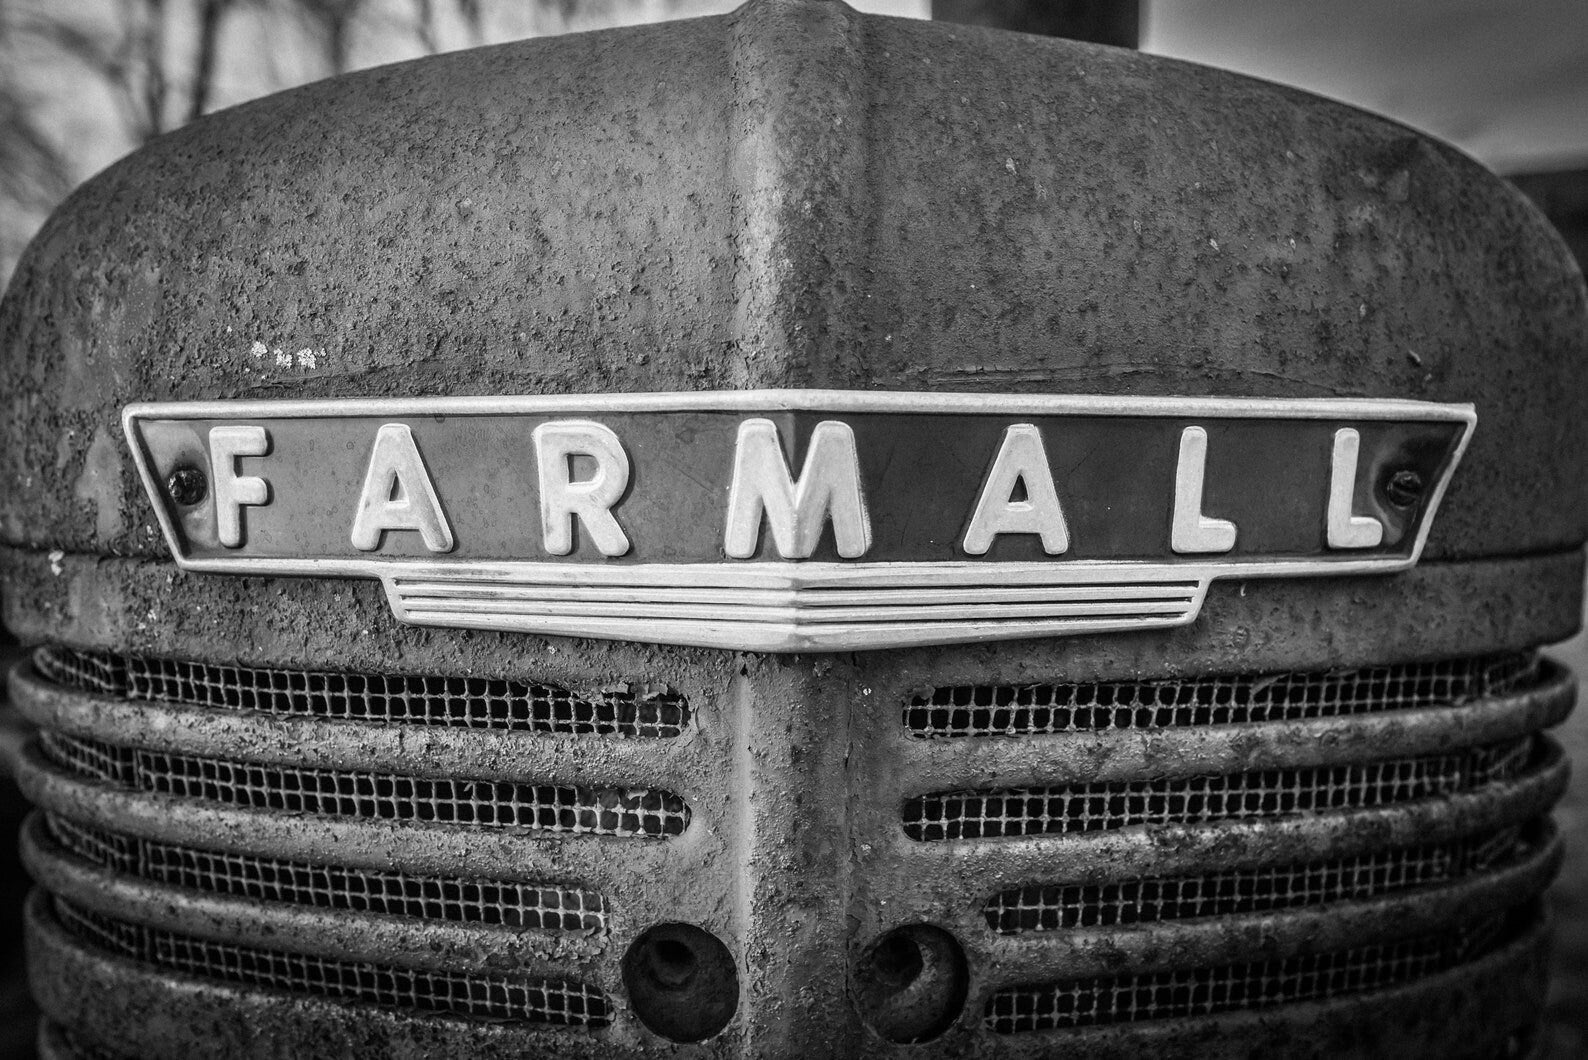 Farmall Tractor Photograph - Black & White, Tractor Photography, Americana Photography, Farmhouse Photography, Metal Wall Art